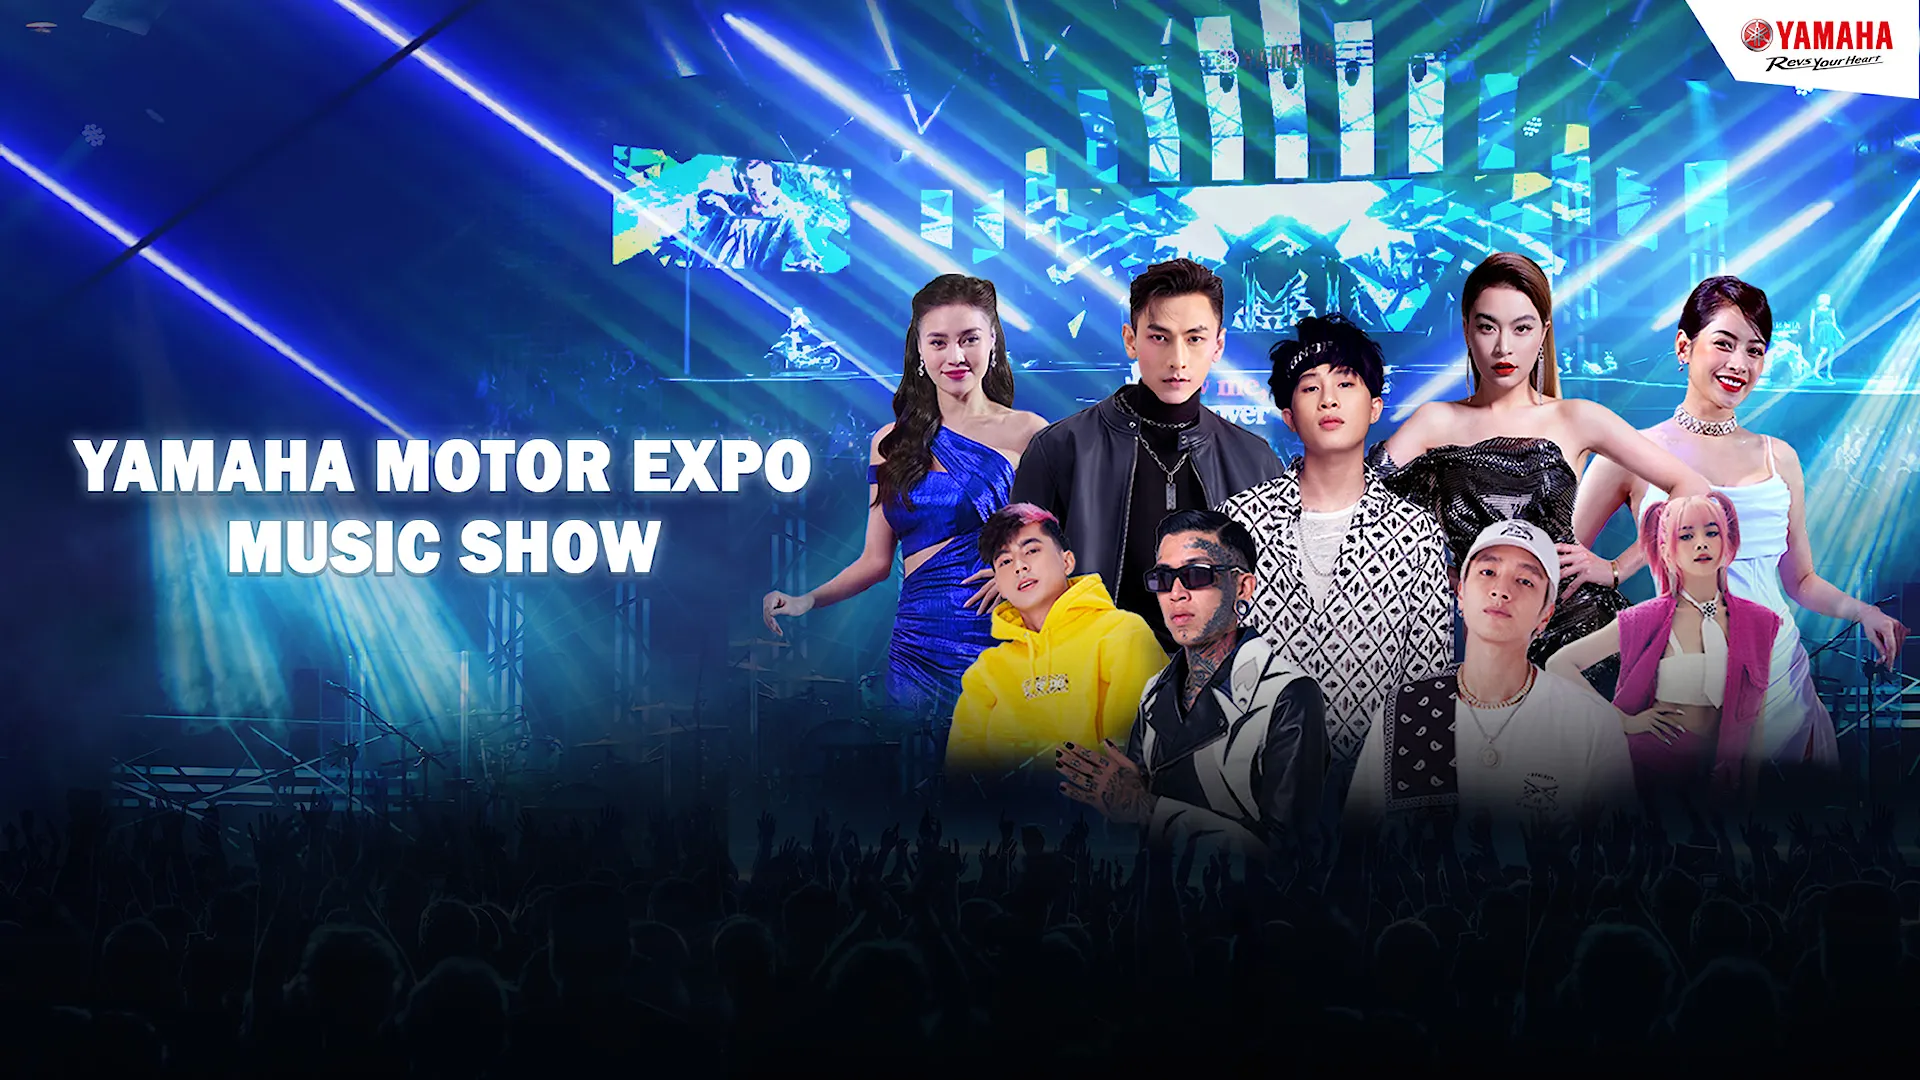 Yamaha Motor Expo Music Show